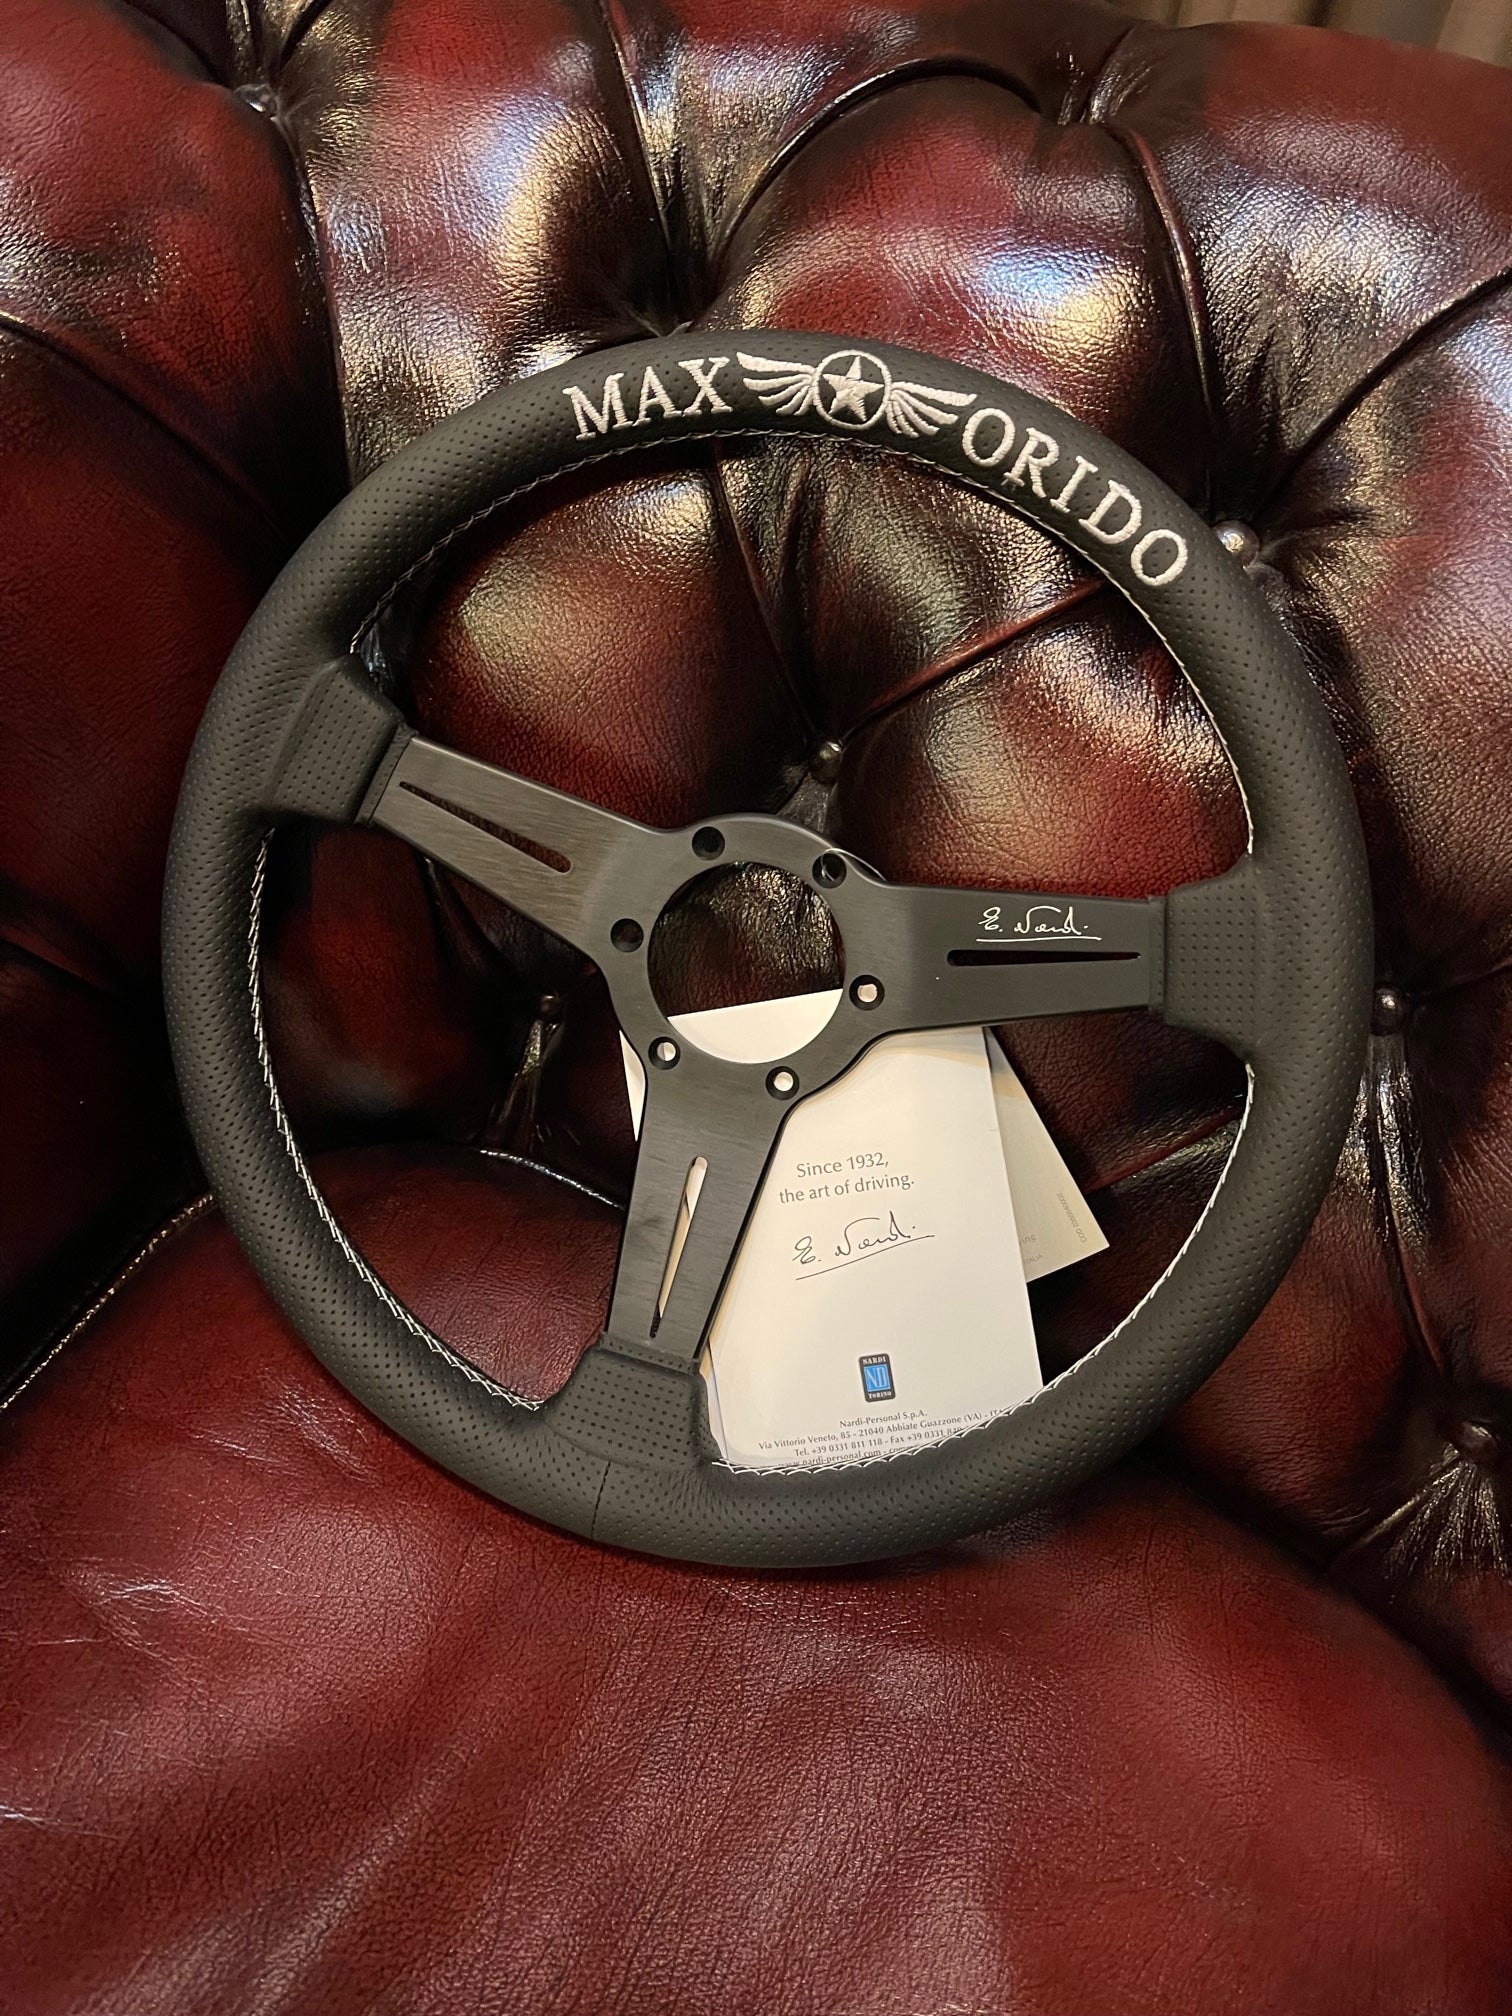 MAX ORIDO × NARDI 2021 Steering Wheel ** SOLD OUT **